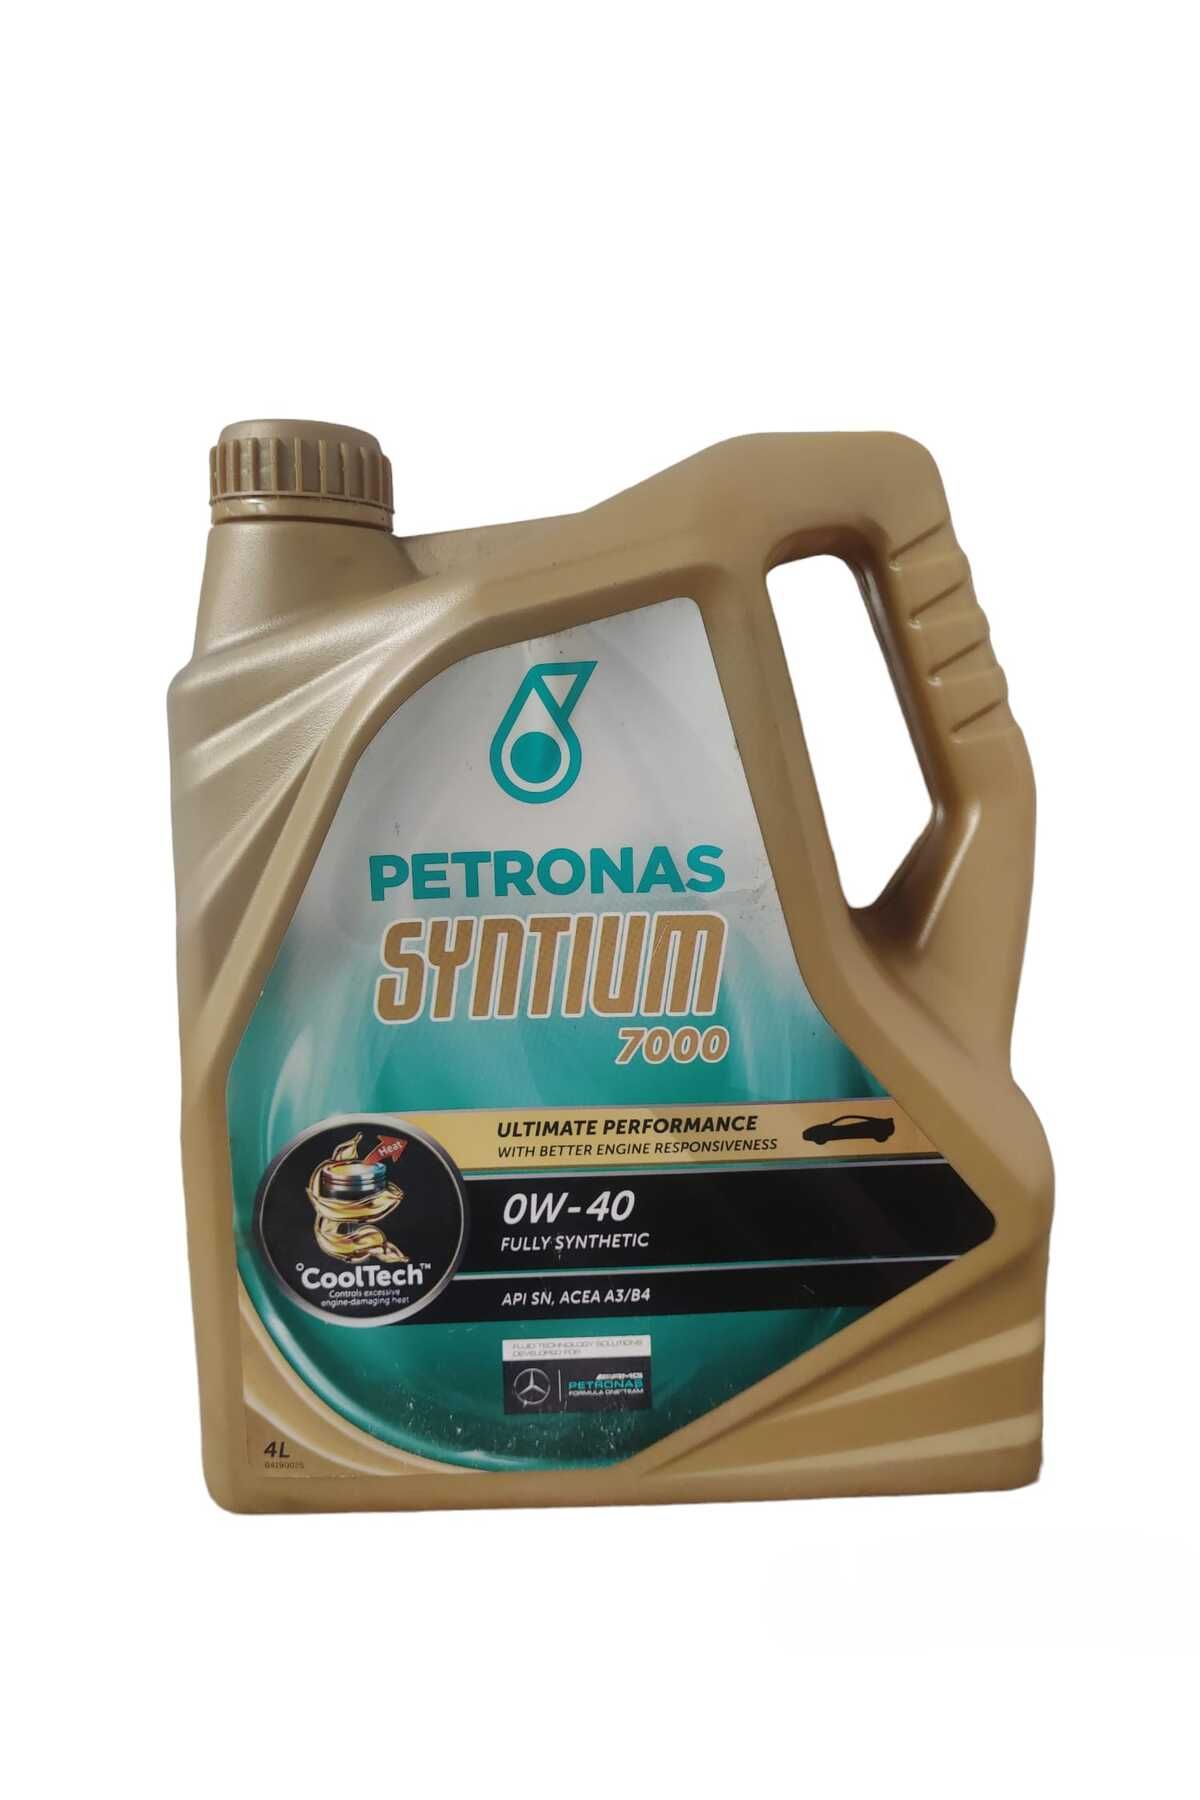 Petronas Syntium 7000 0w-40 4lt 2019